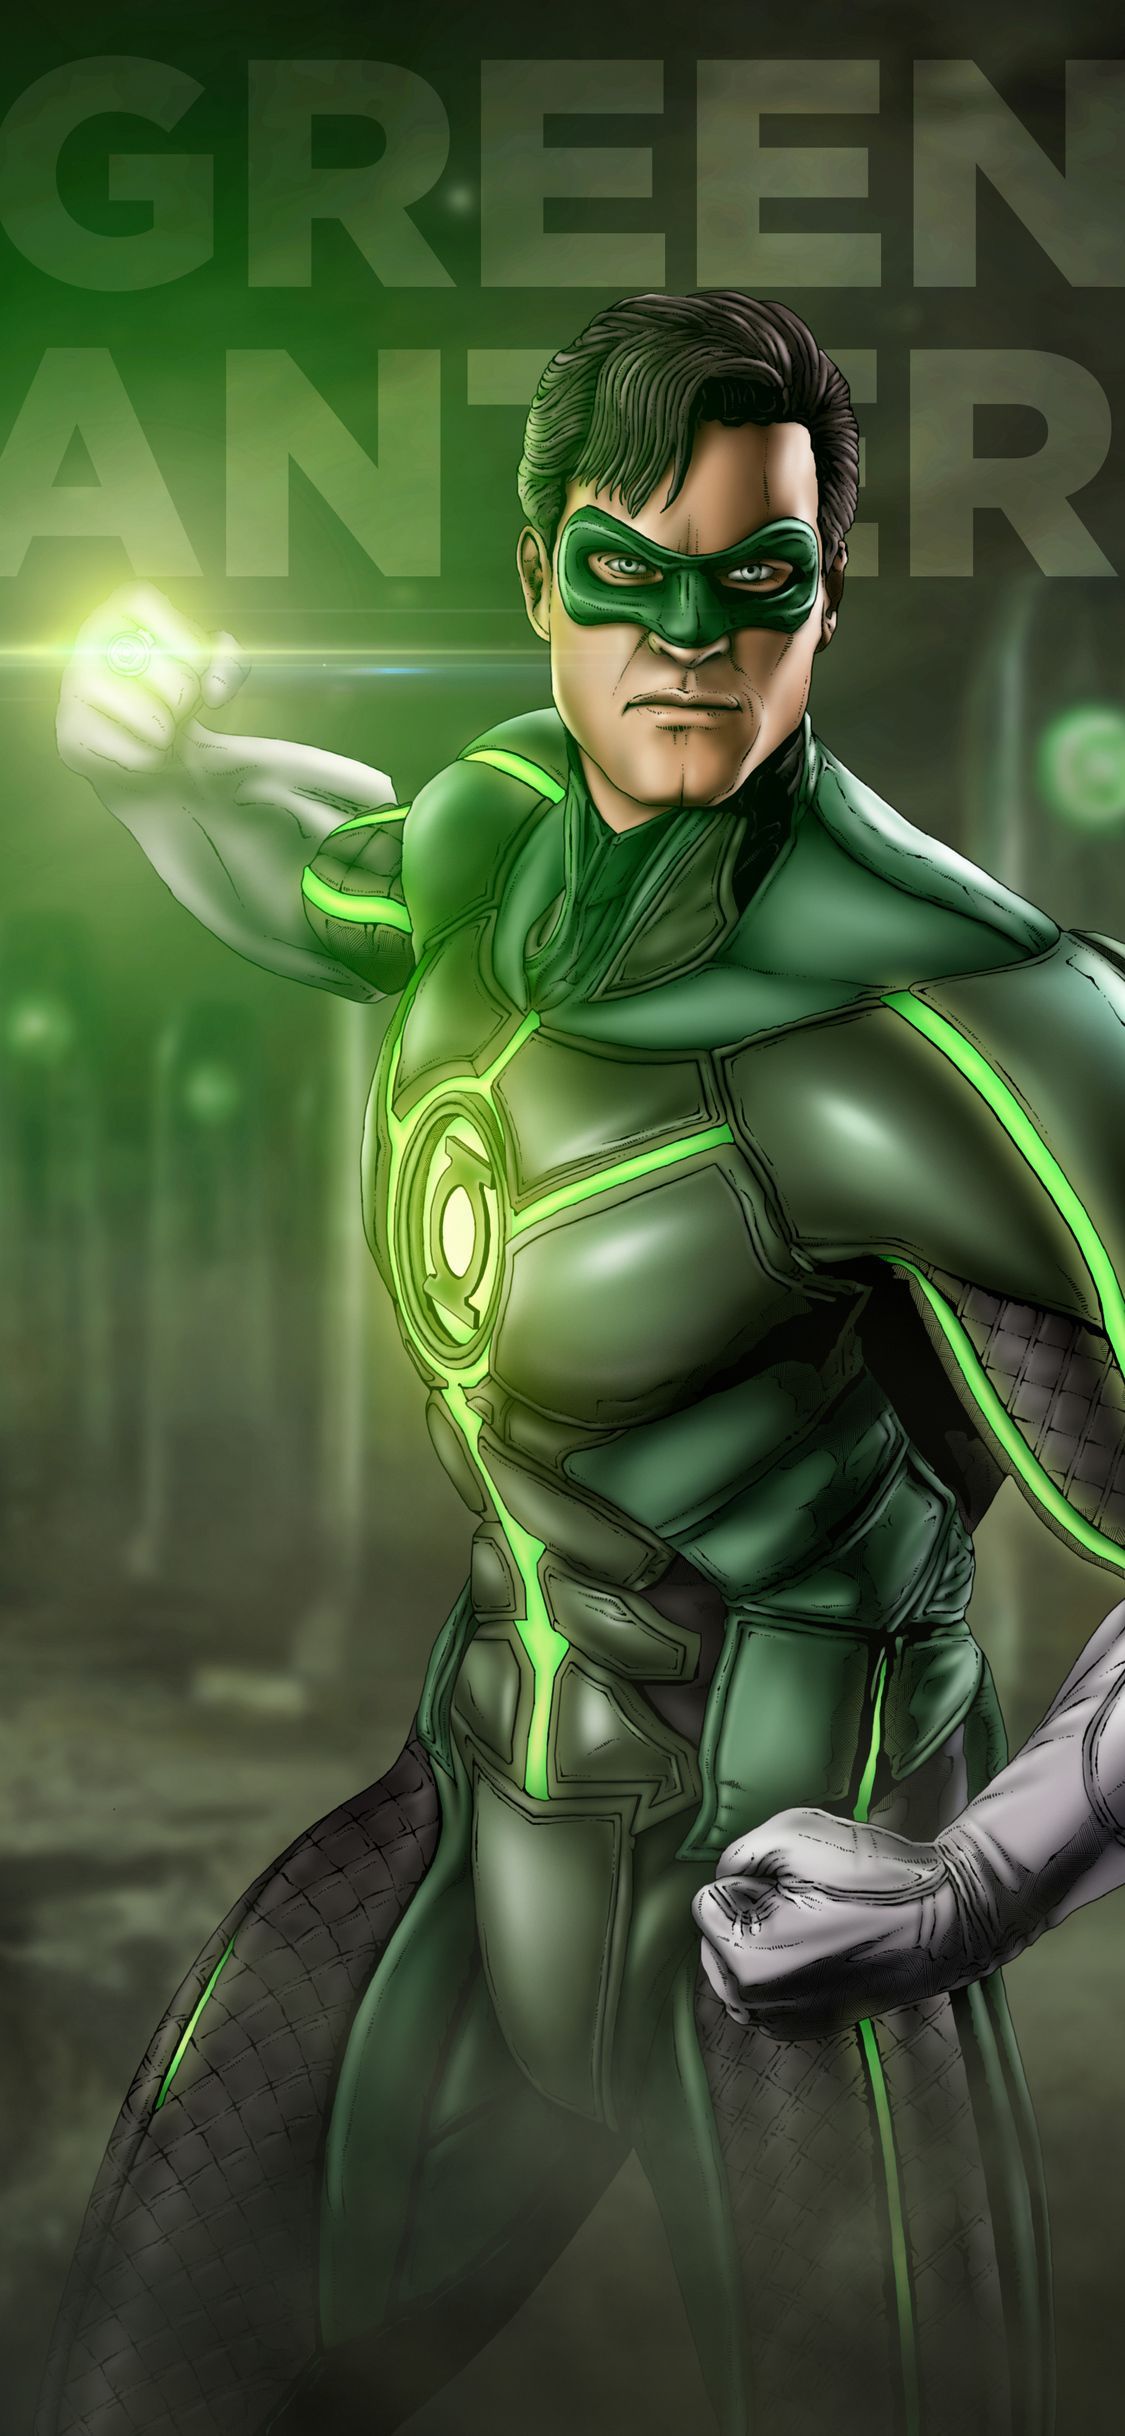 Green Lantern Artwork iPhone .com